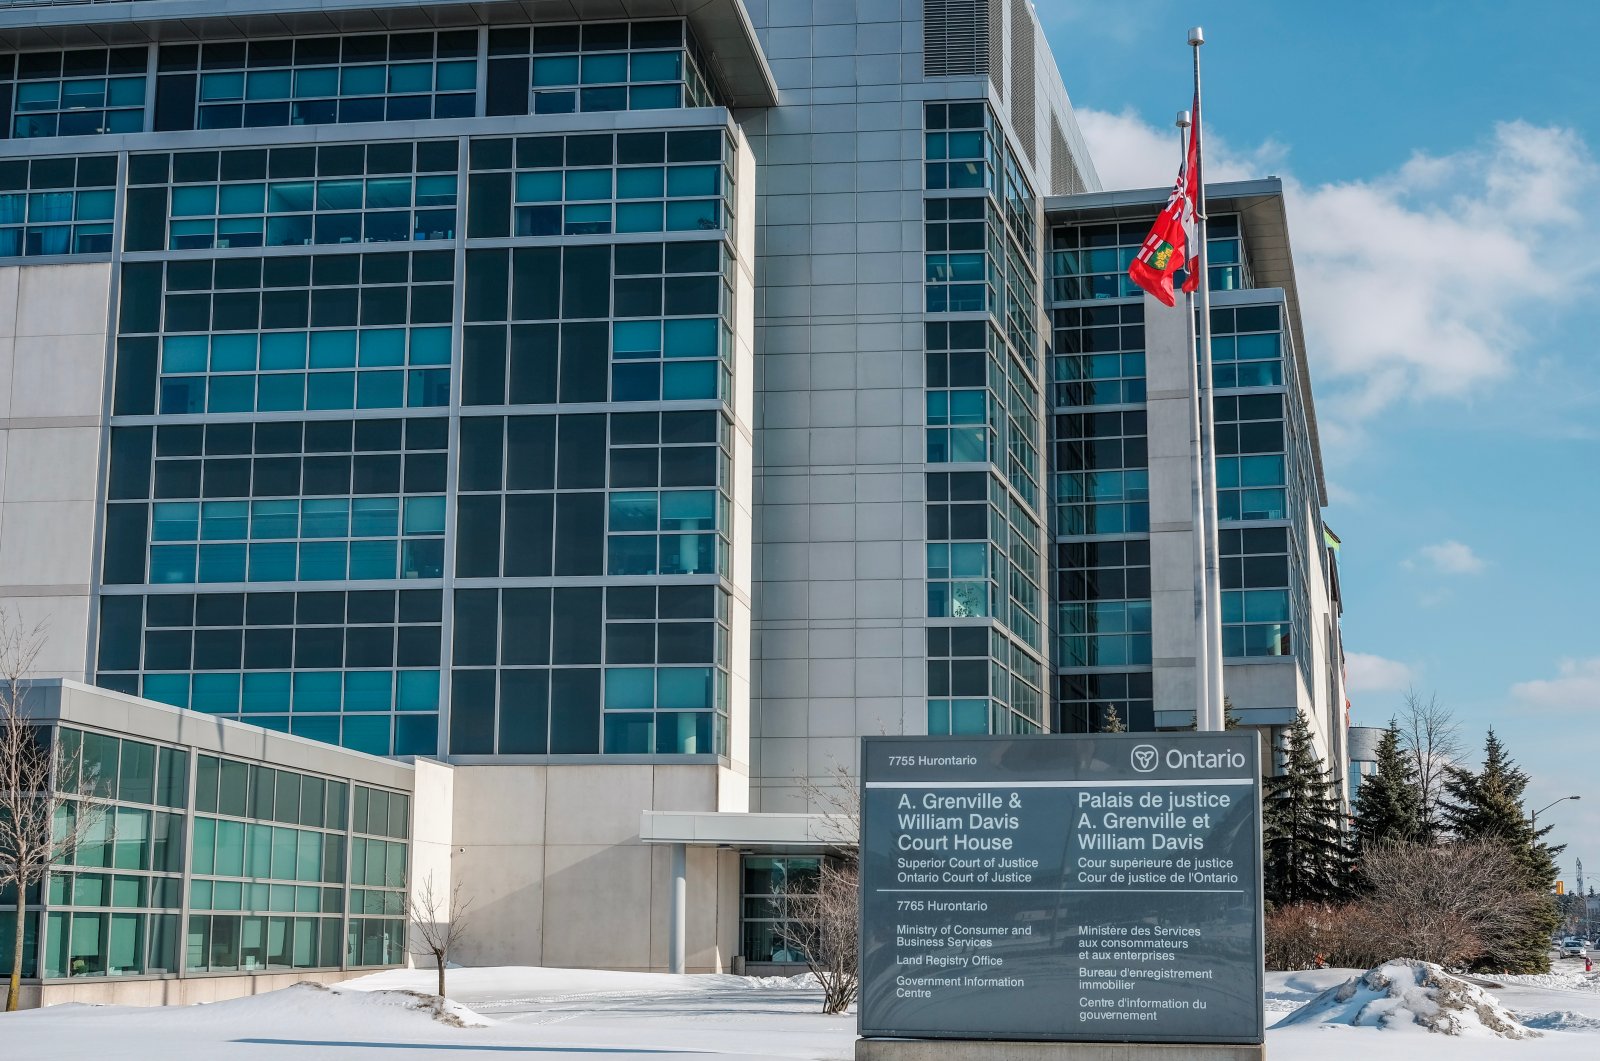  Ontario court of justice and superior court in Brampton, Ontario, Feb. 19, 2019. (Shutterstock File Photo)